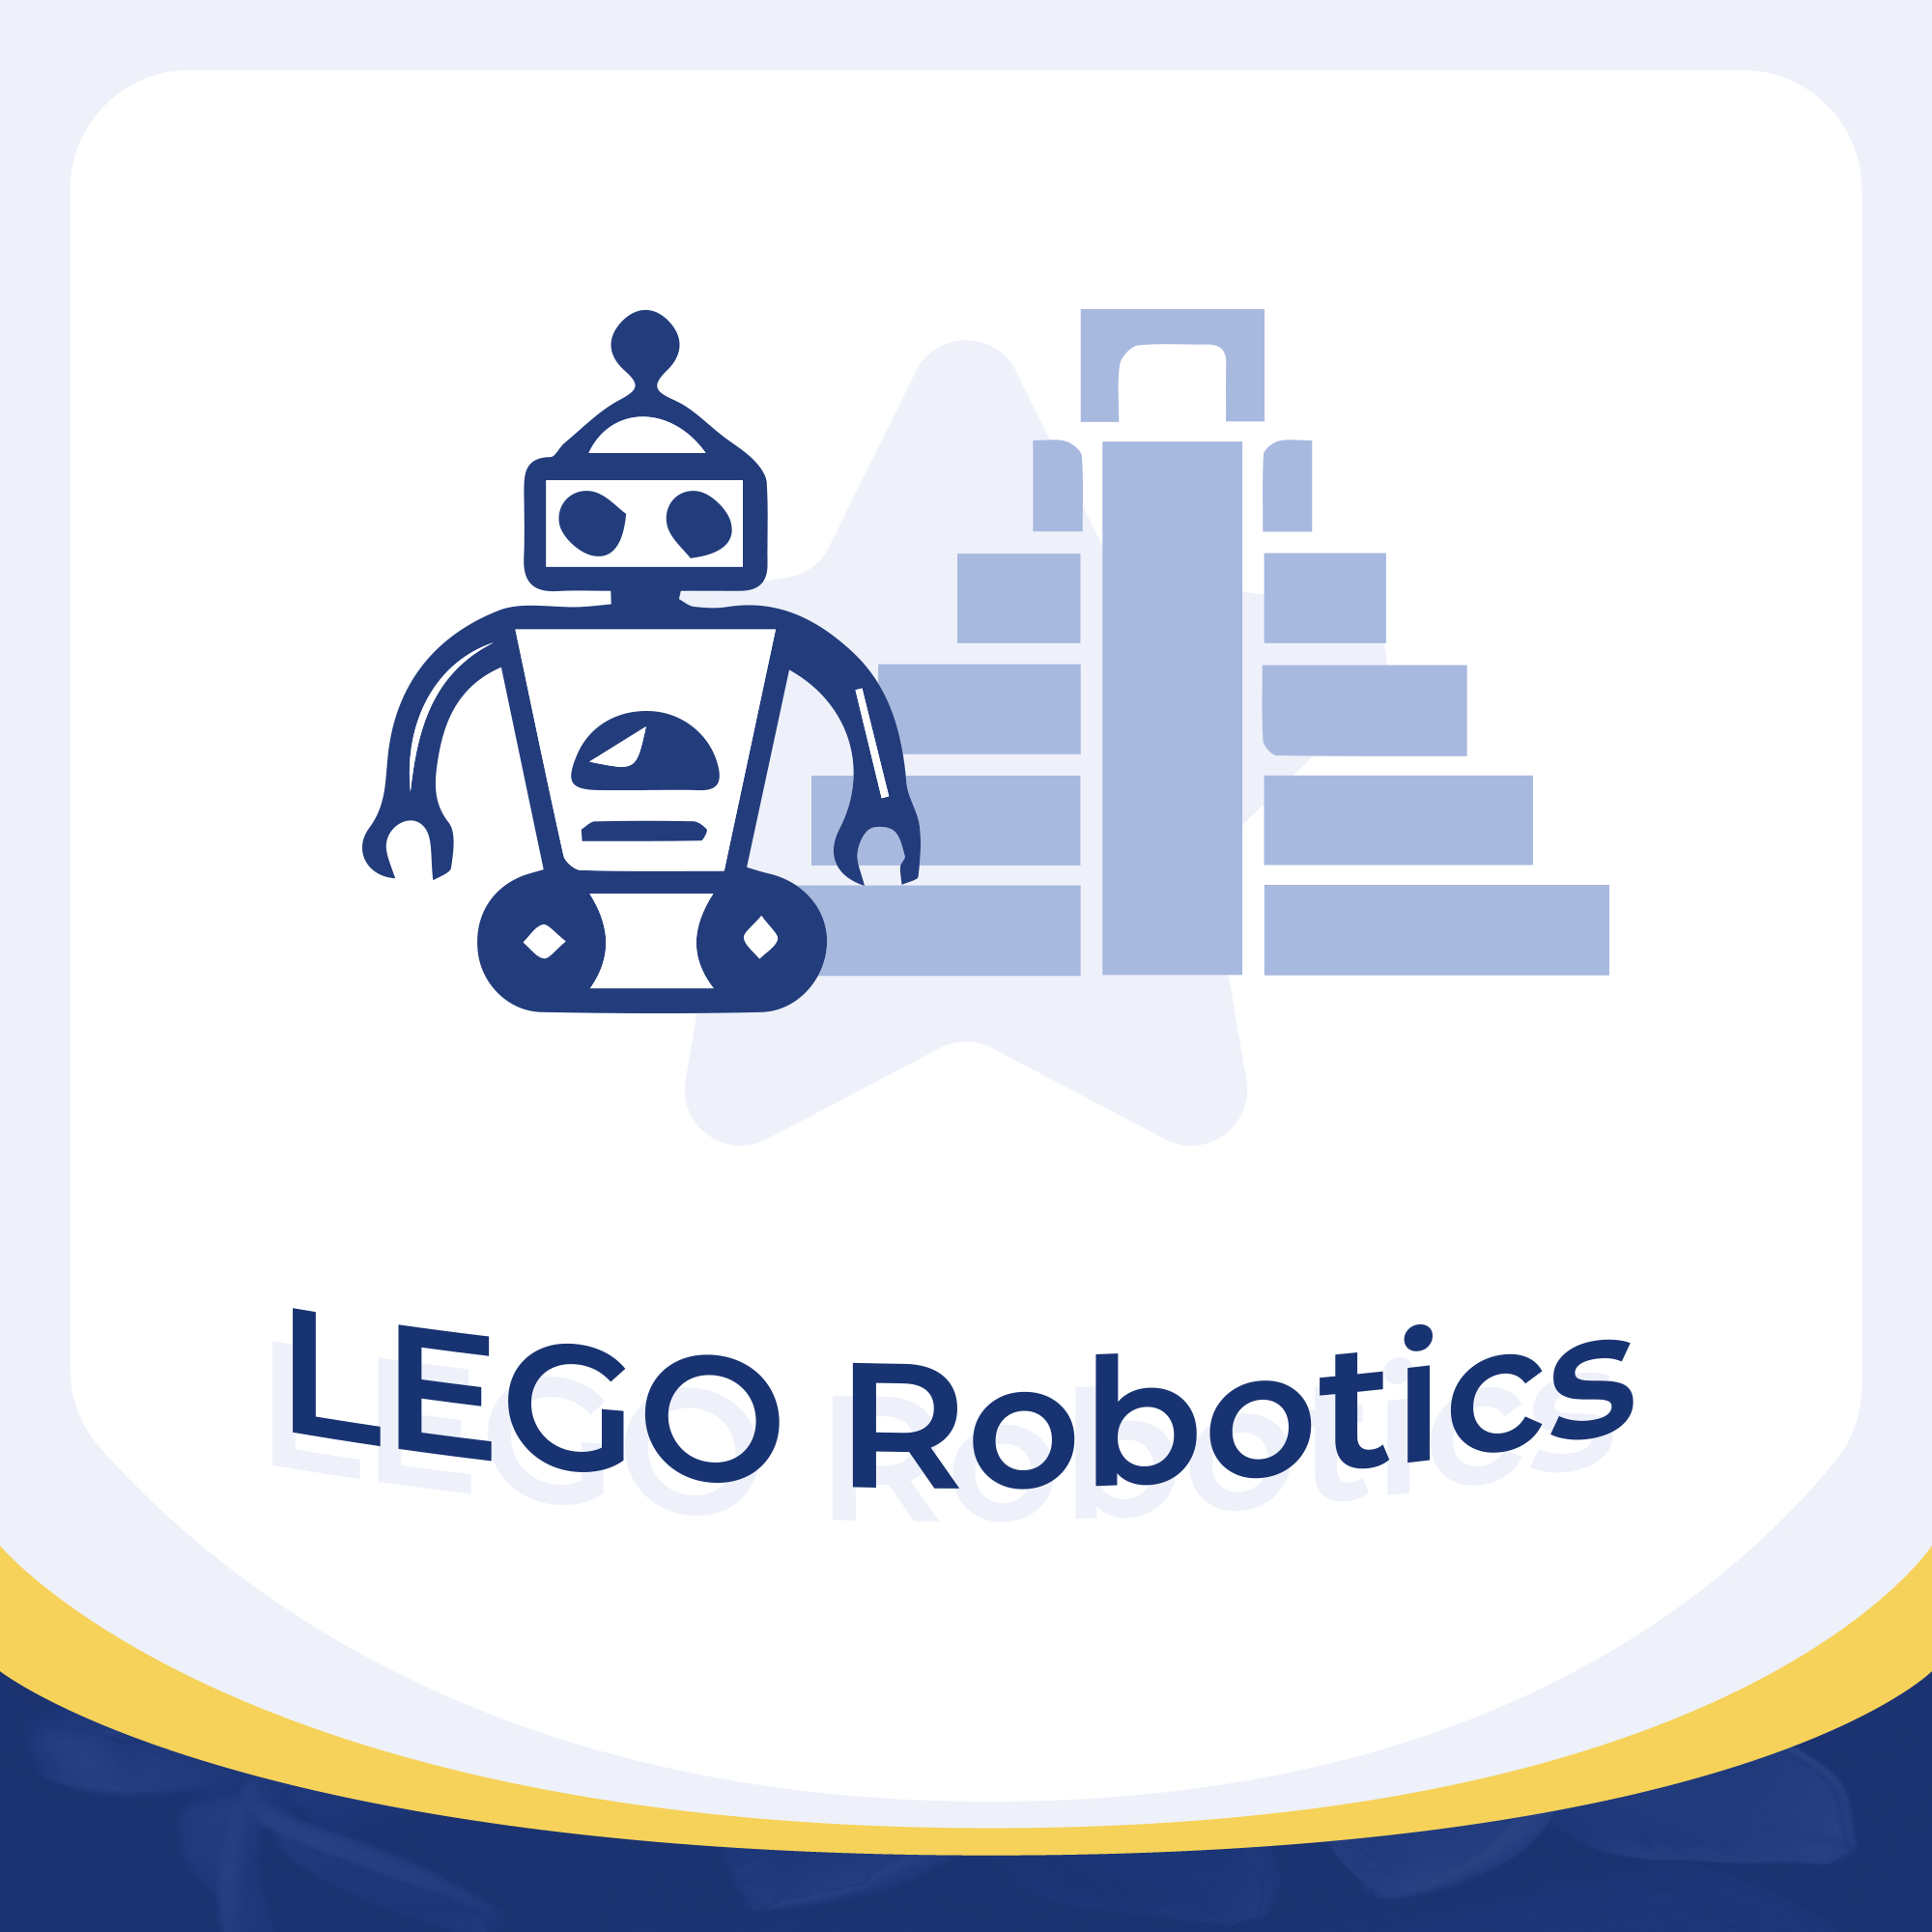 Lego Robotics